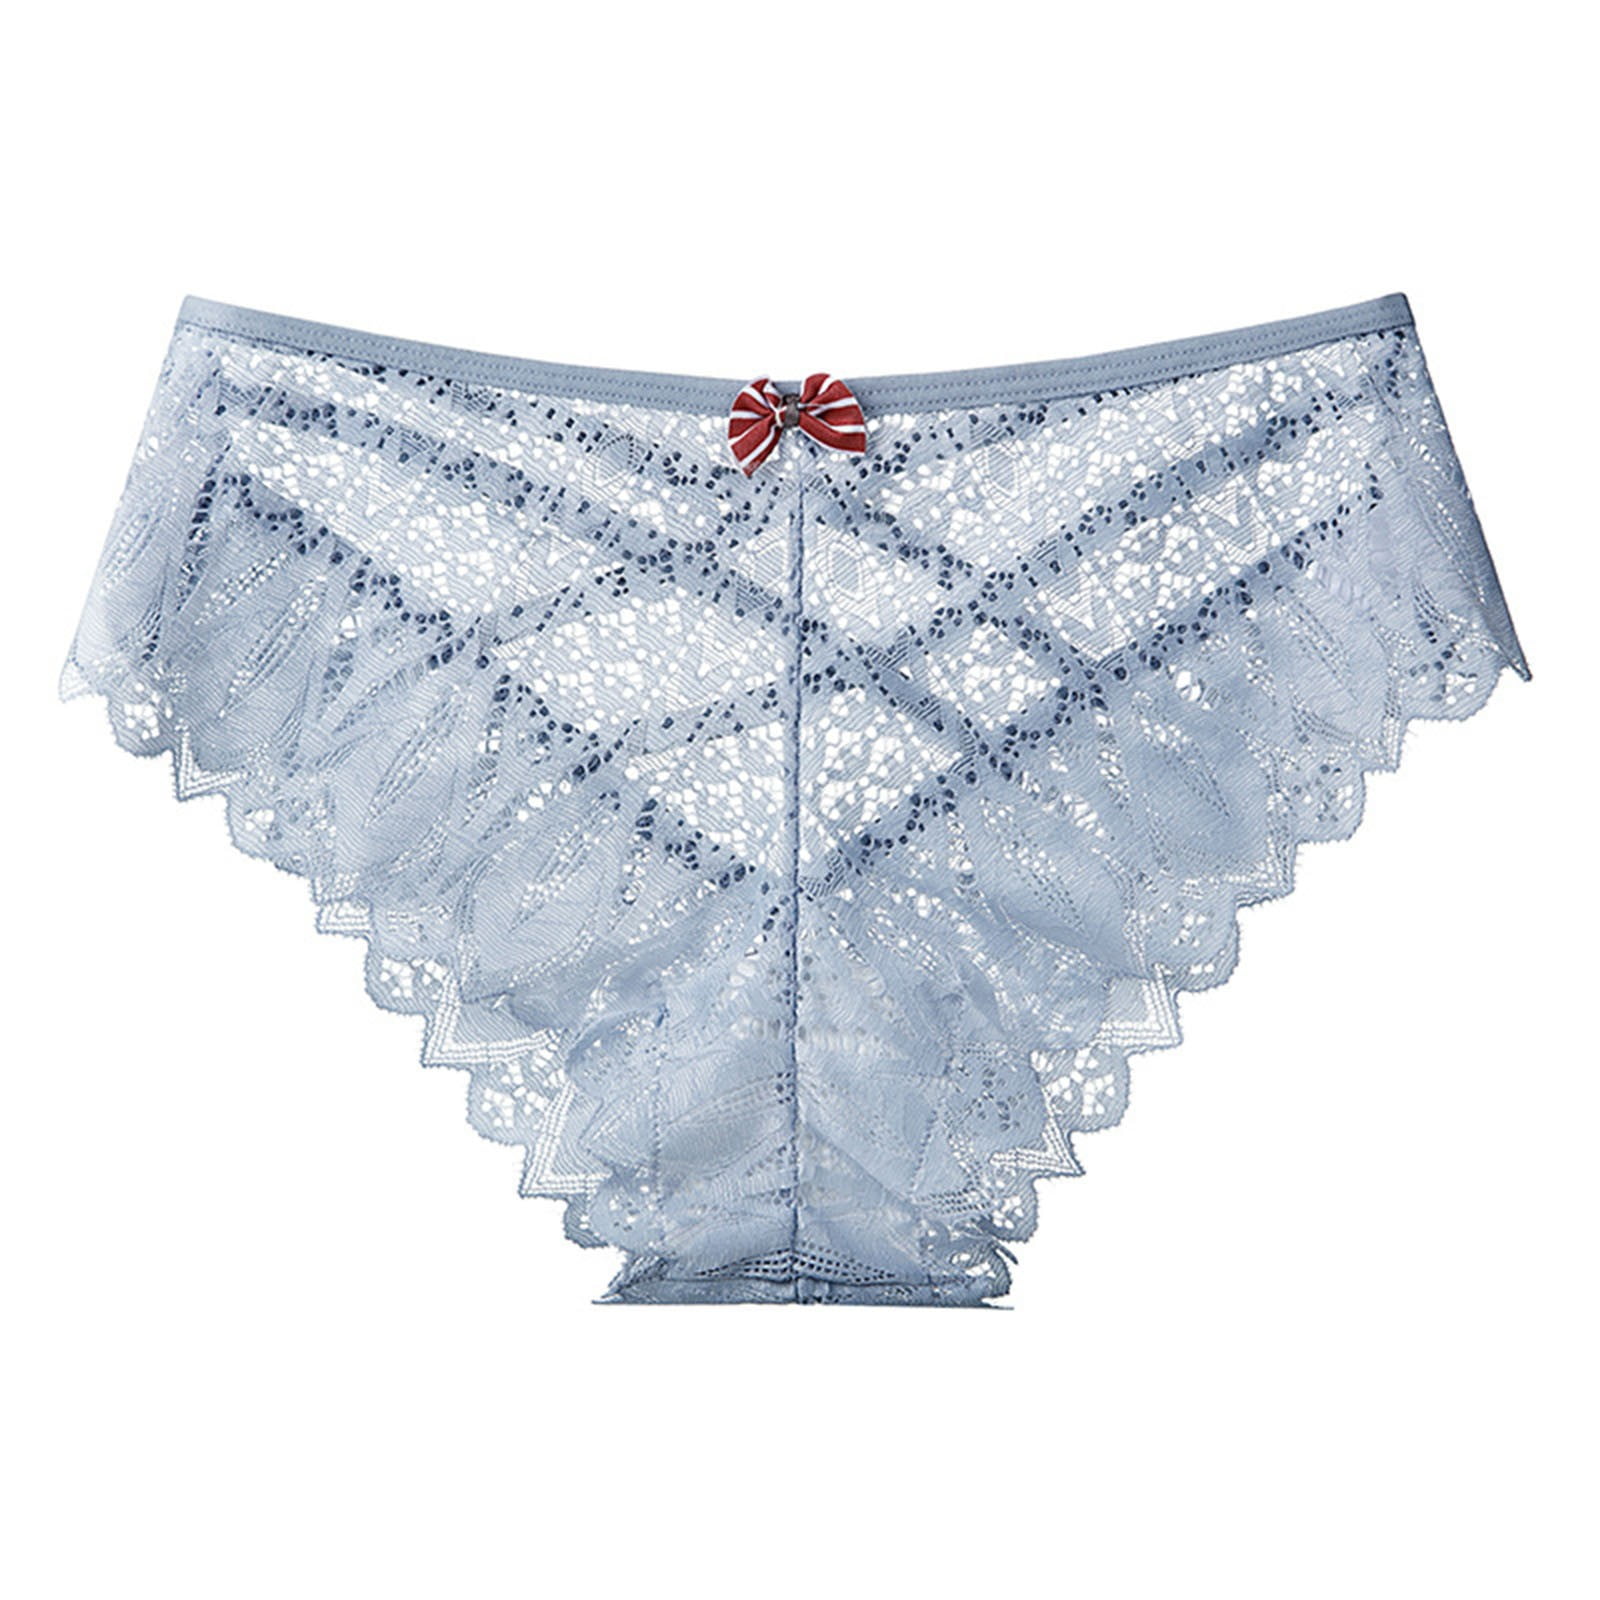 eczipvz Lingerie for Women Women High Waist Panties Breathable Abdominal  Cotton Panties Feminine Seamless Cotton Briefs,Blue 